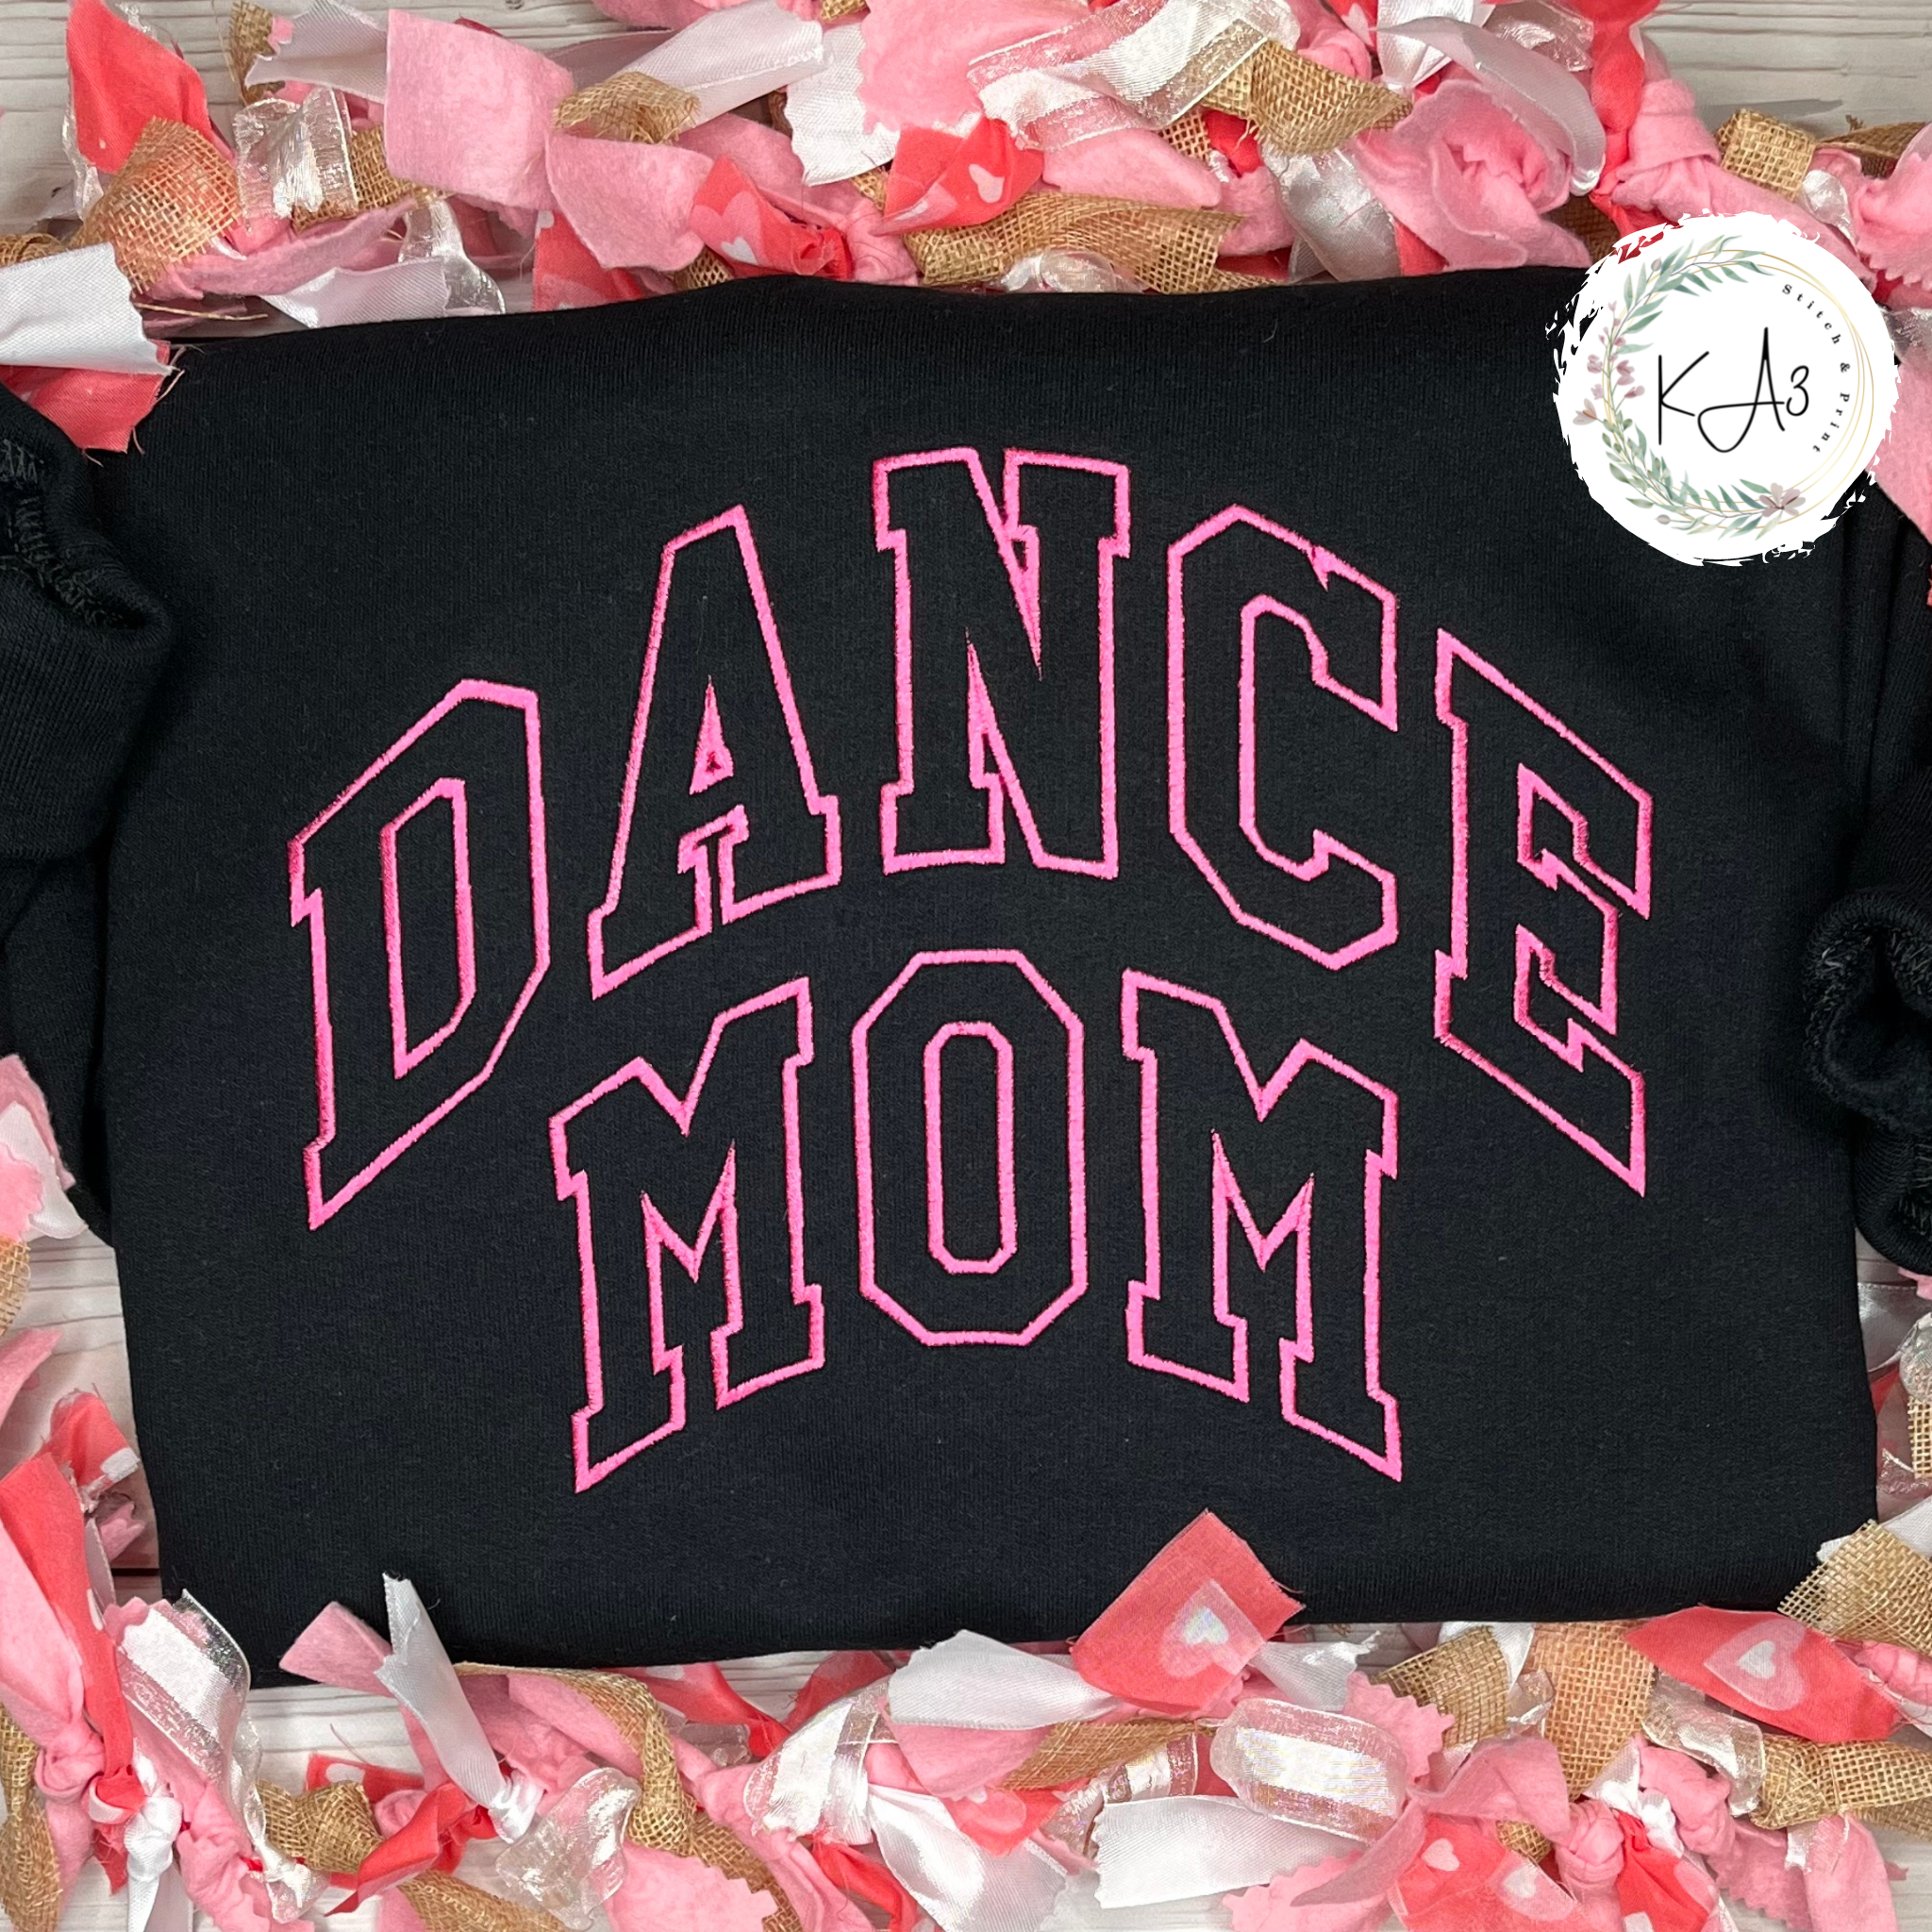 CHEER/DANCE MOM Sweatshirt - KA3 Stitch & Print